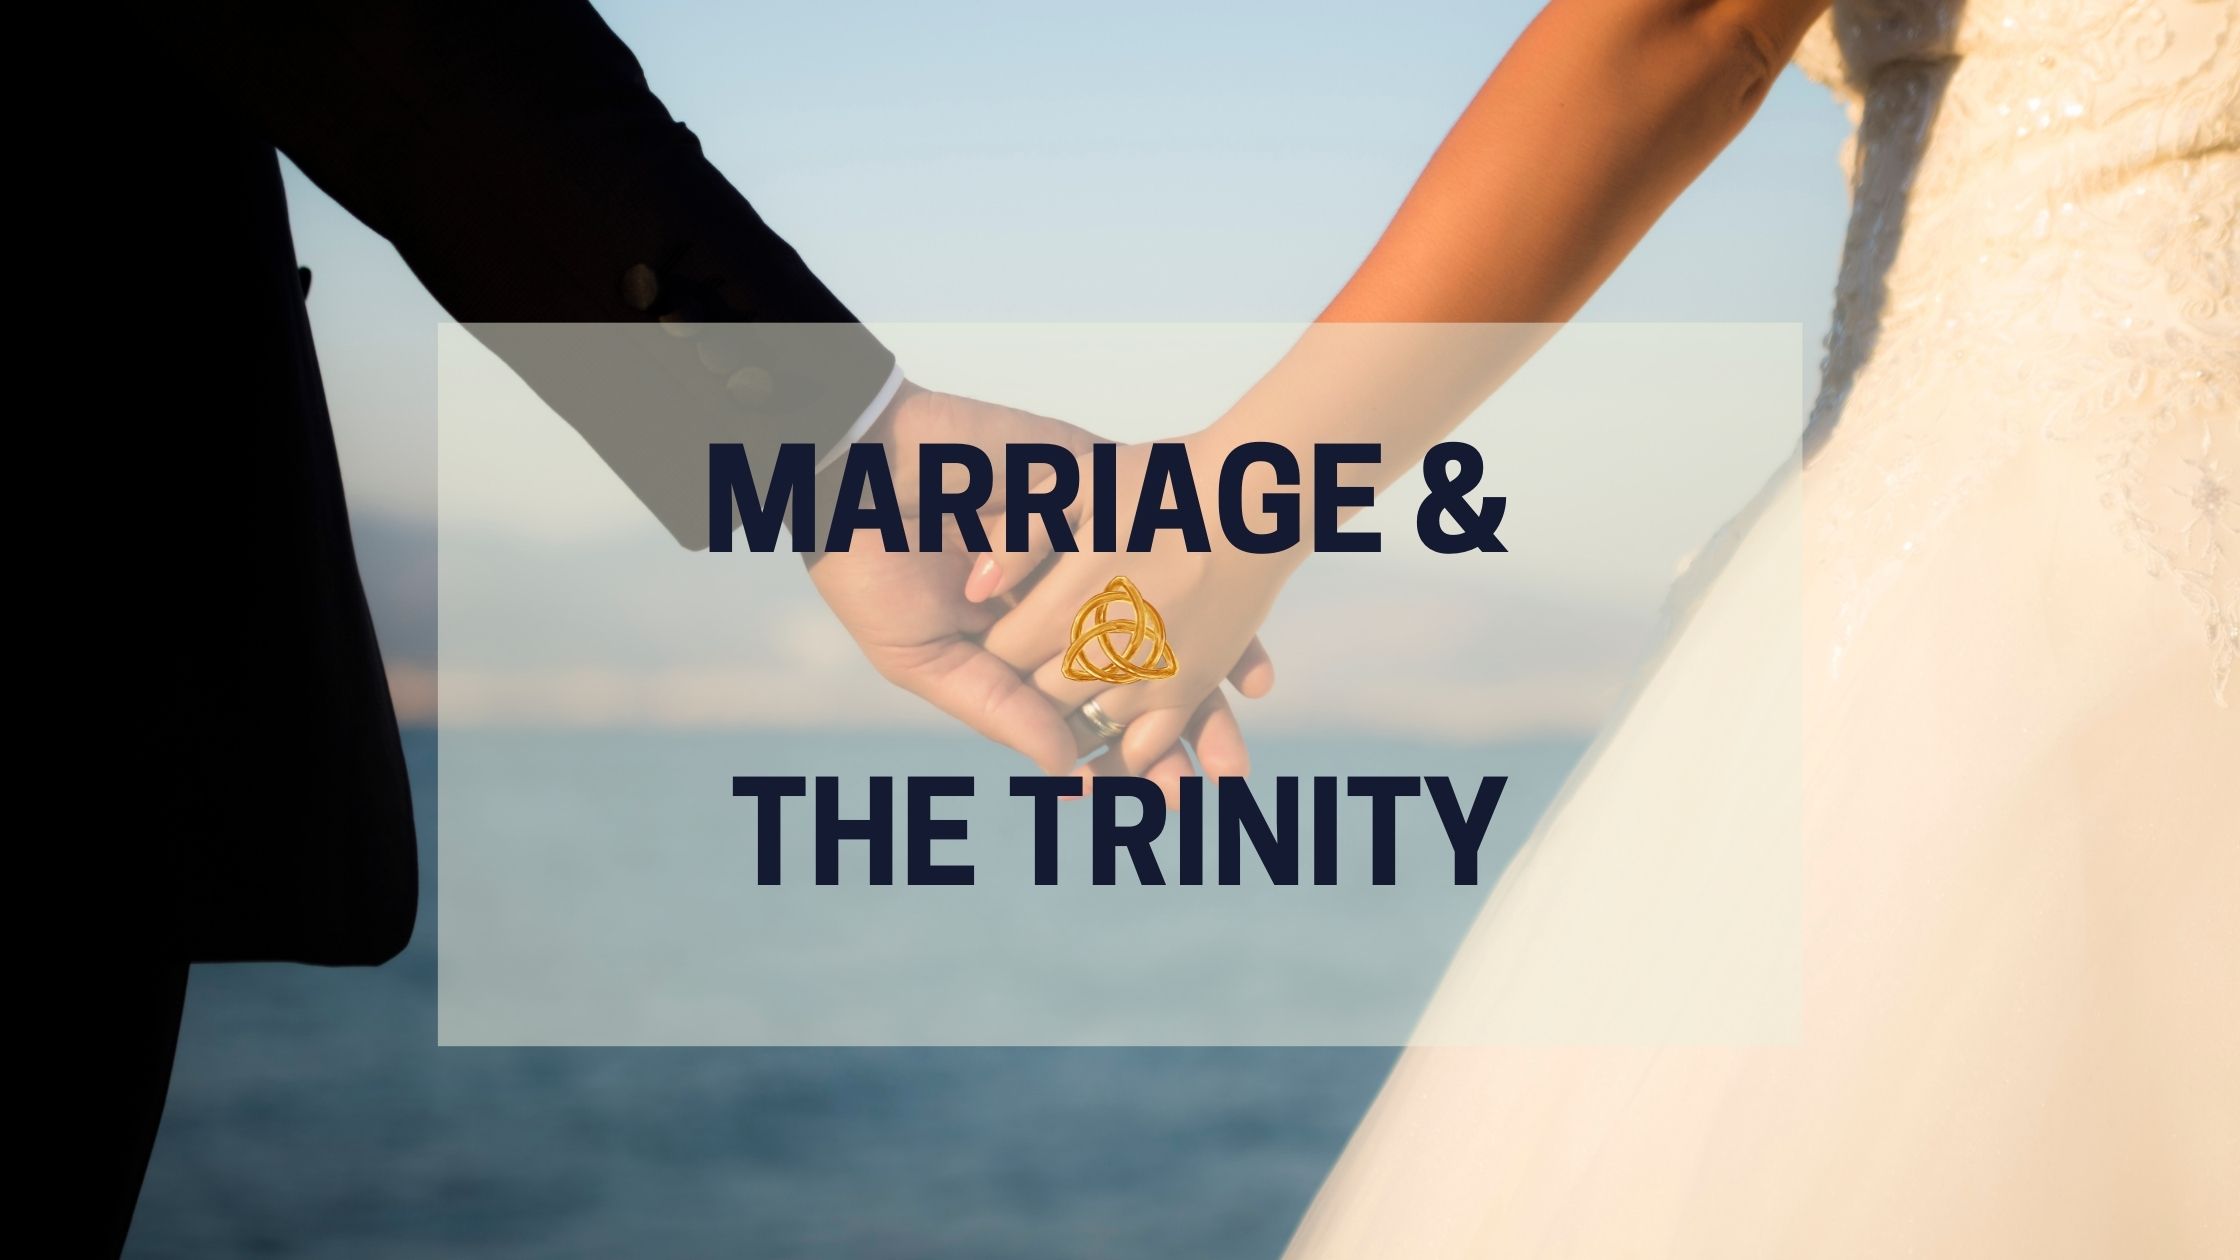 MARRIAGE & THE TRINITY